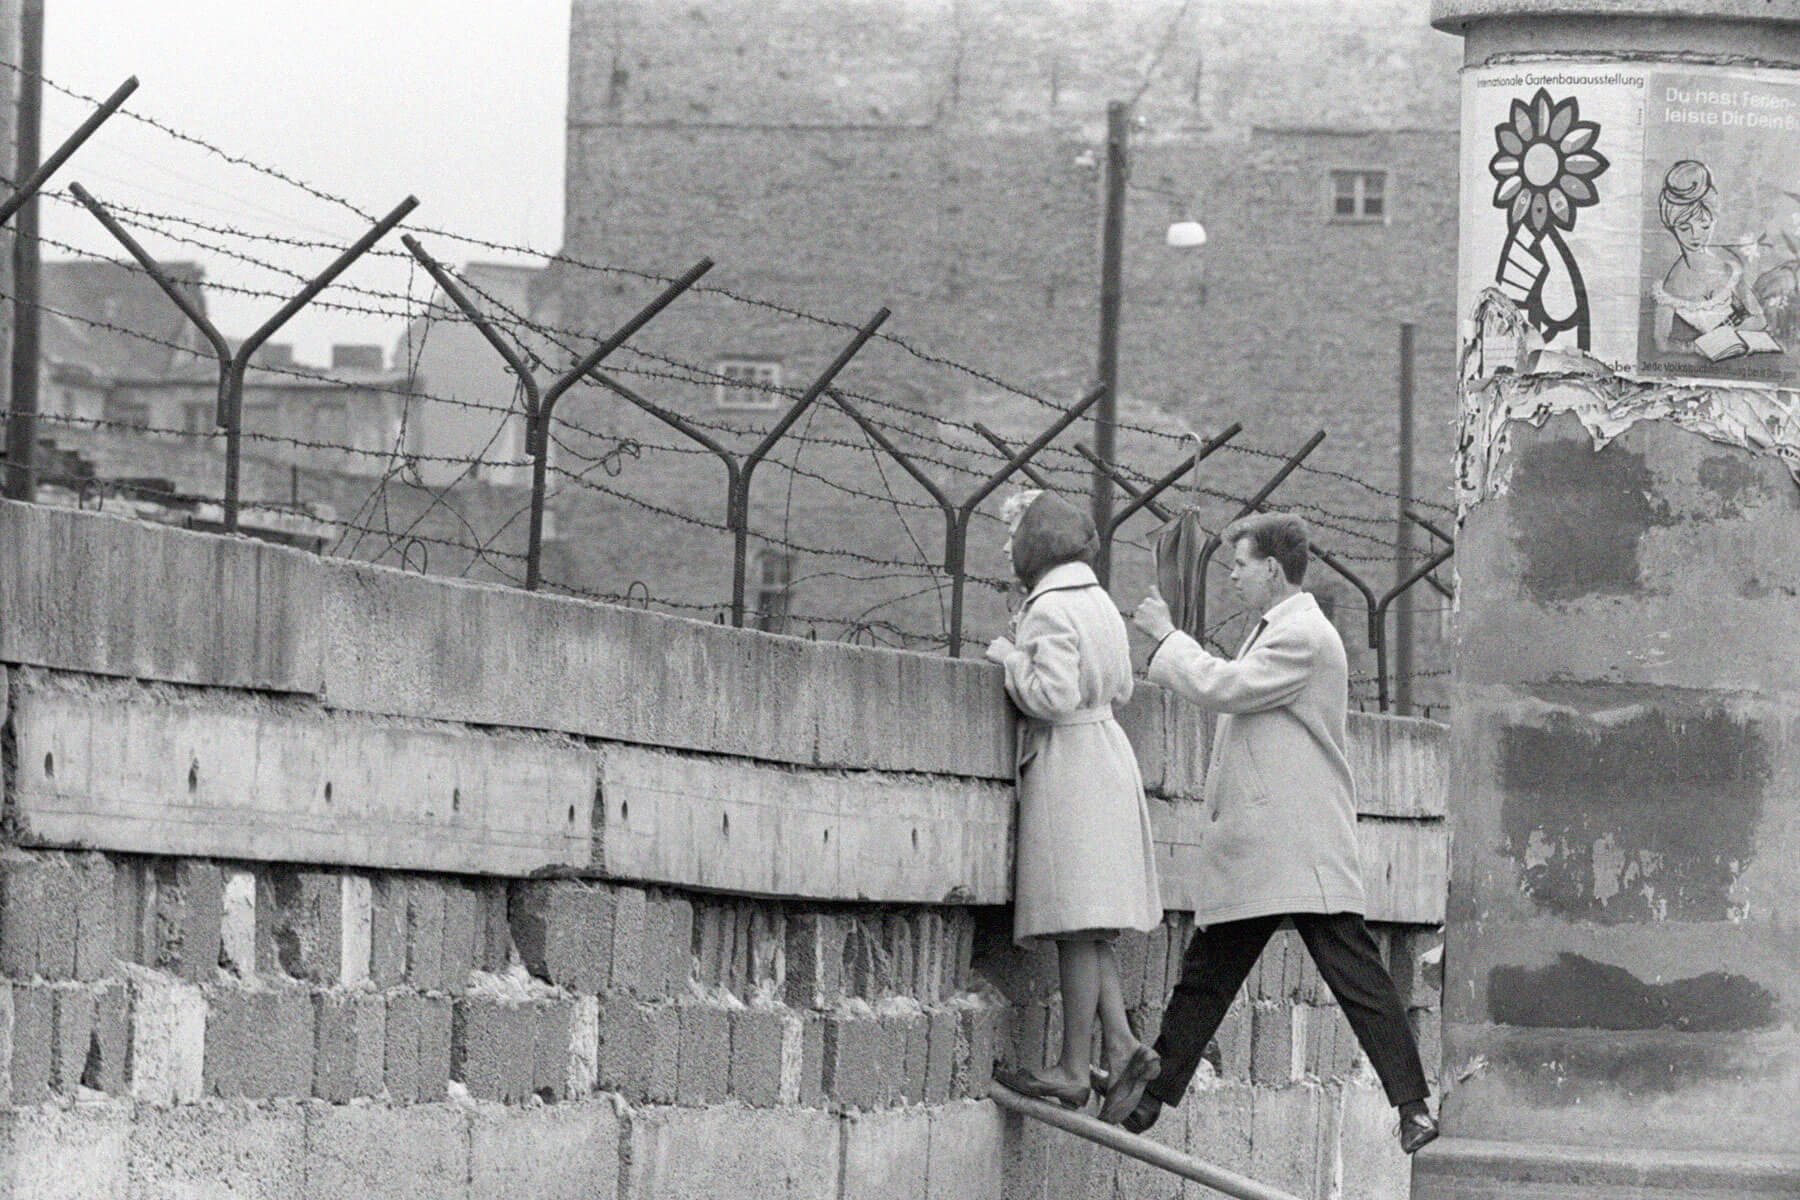 Peering over the Berlin Wall